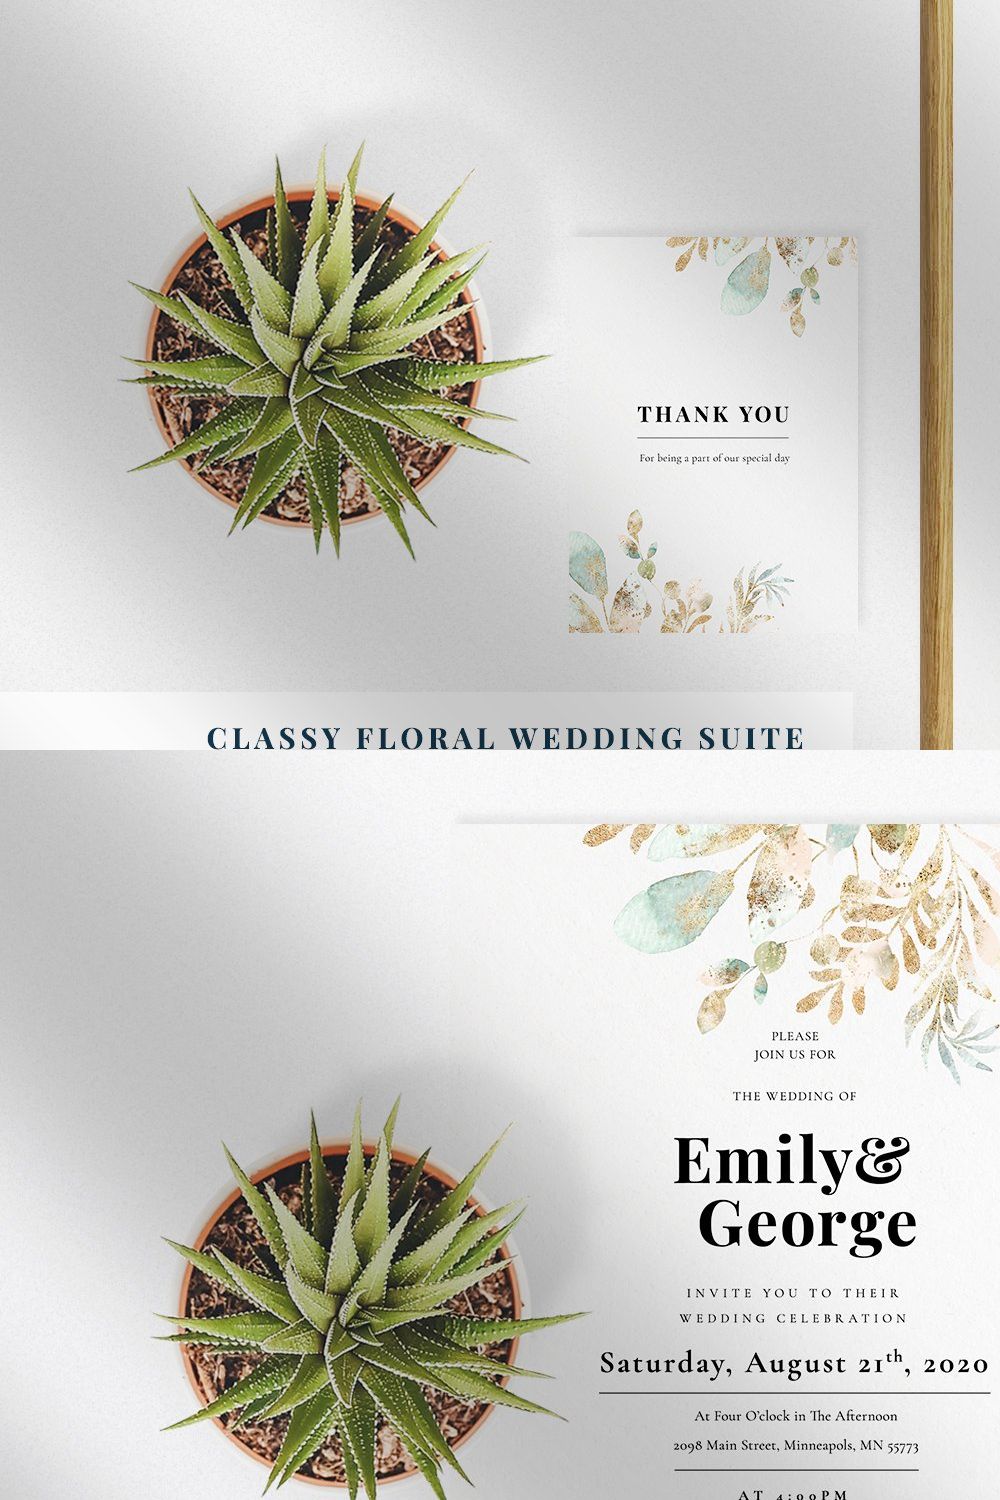 Classy Floral Wedding Suite pinterest preview image.